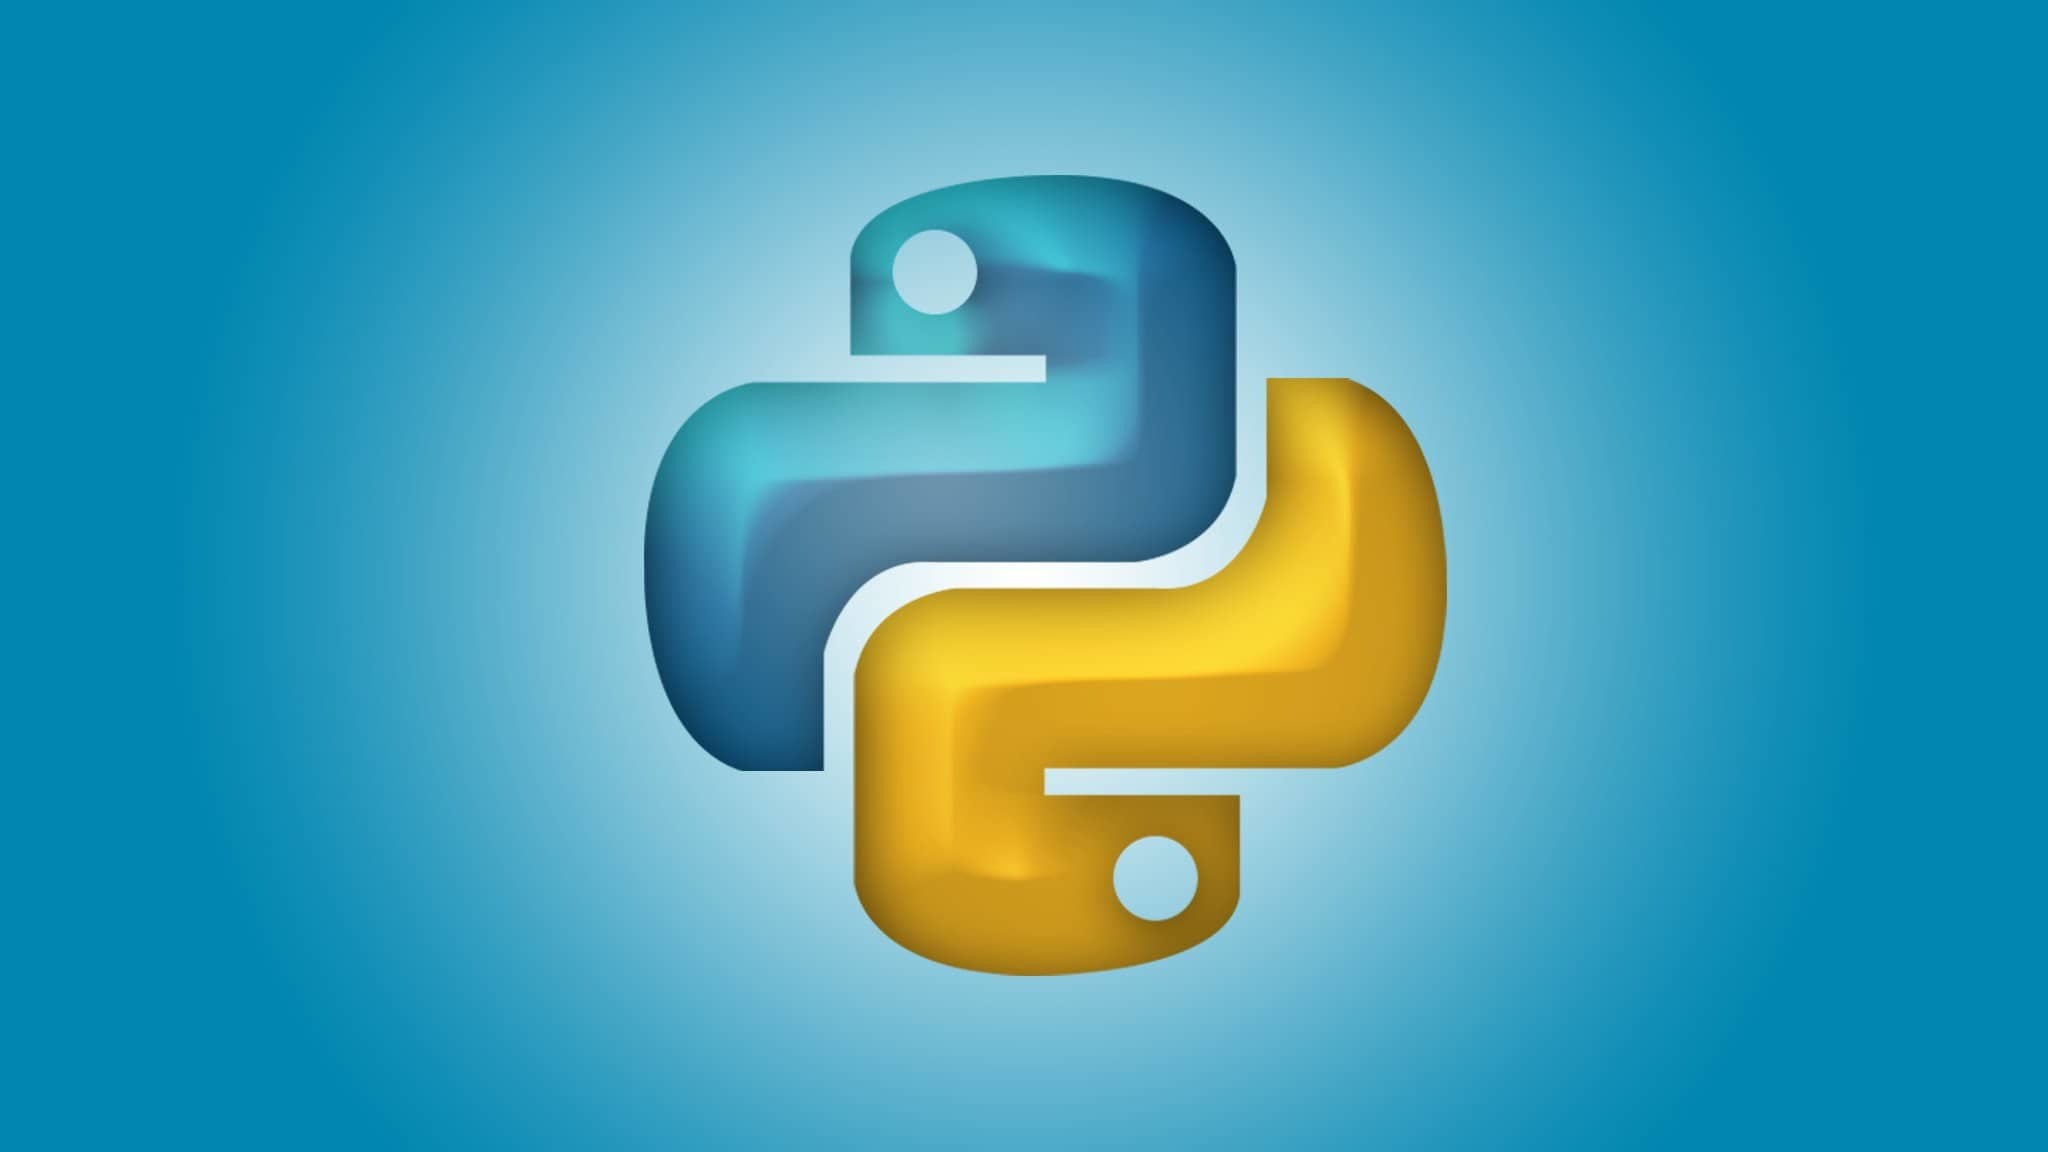 Python Programming Language